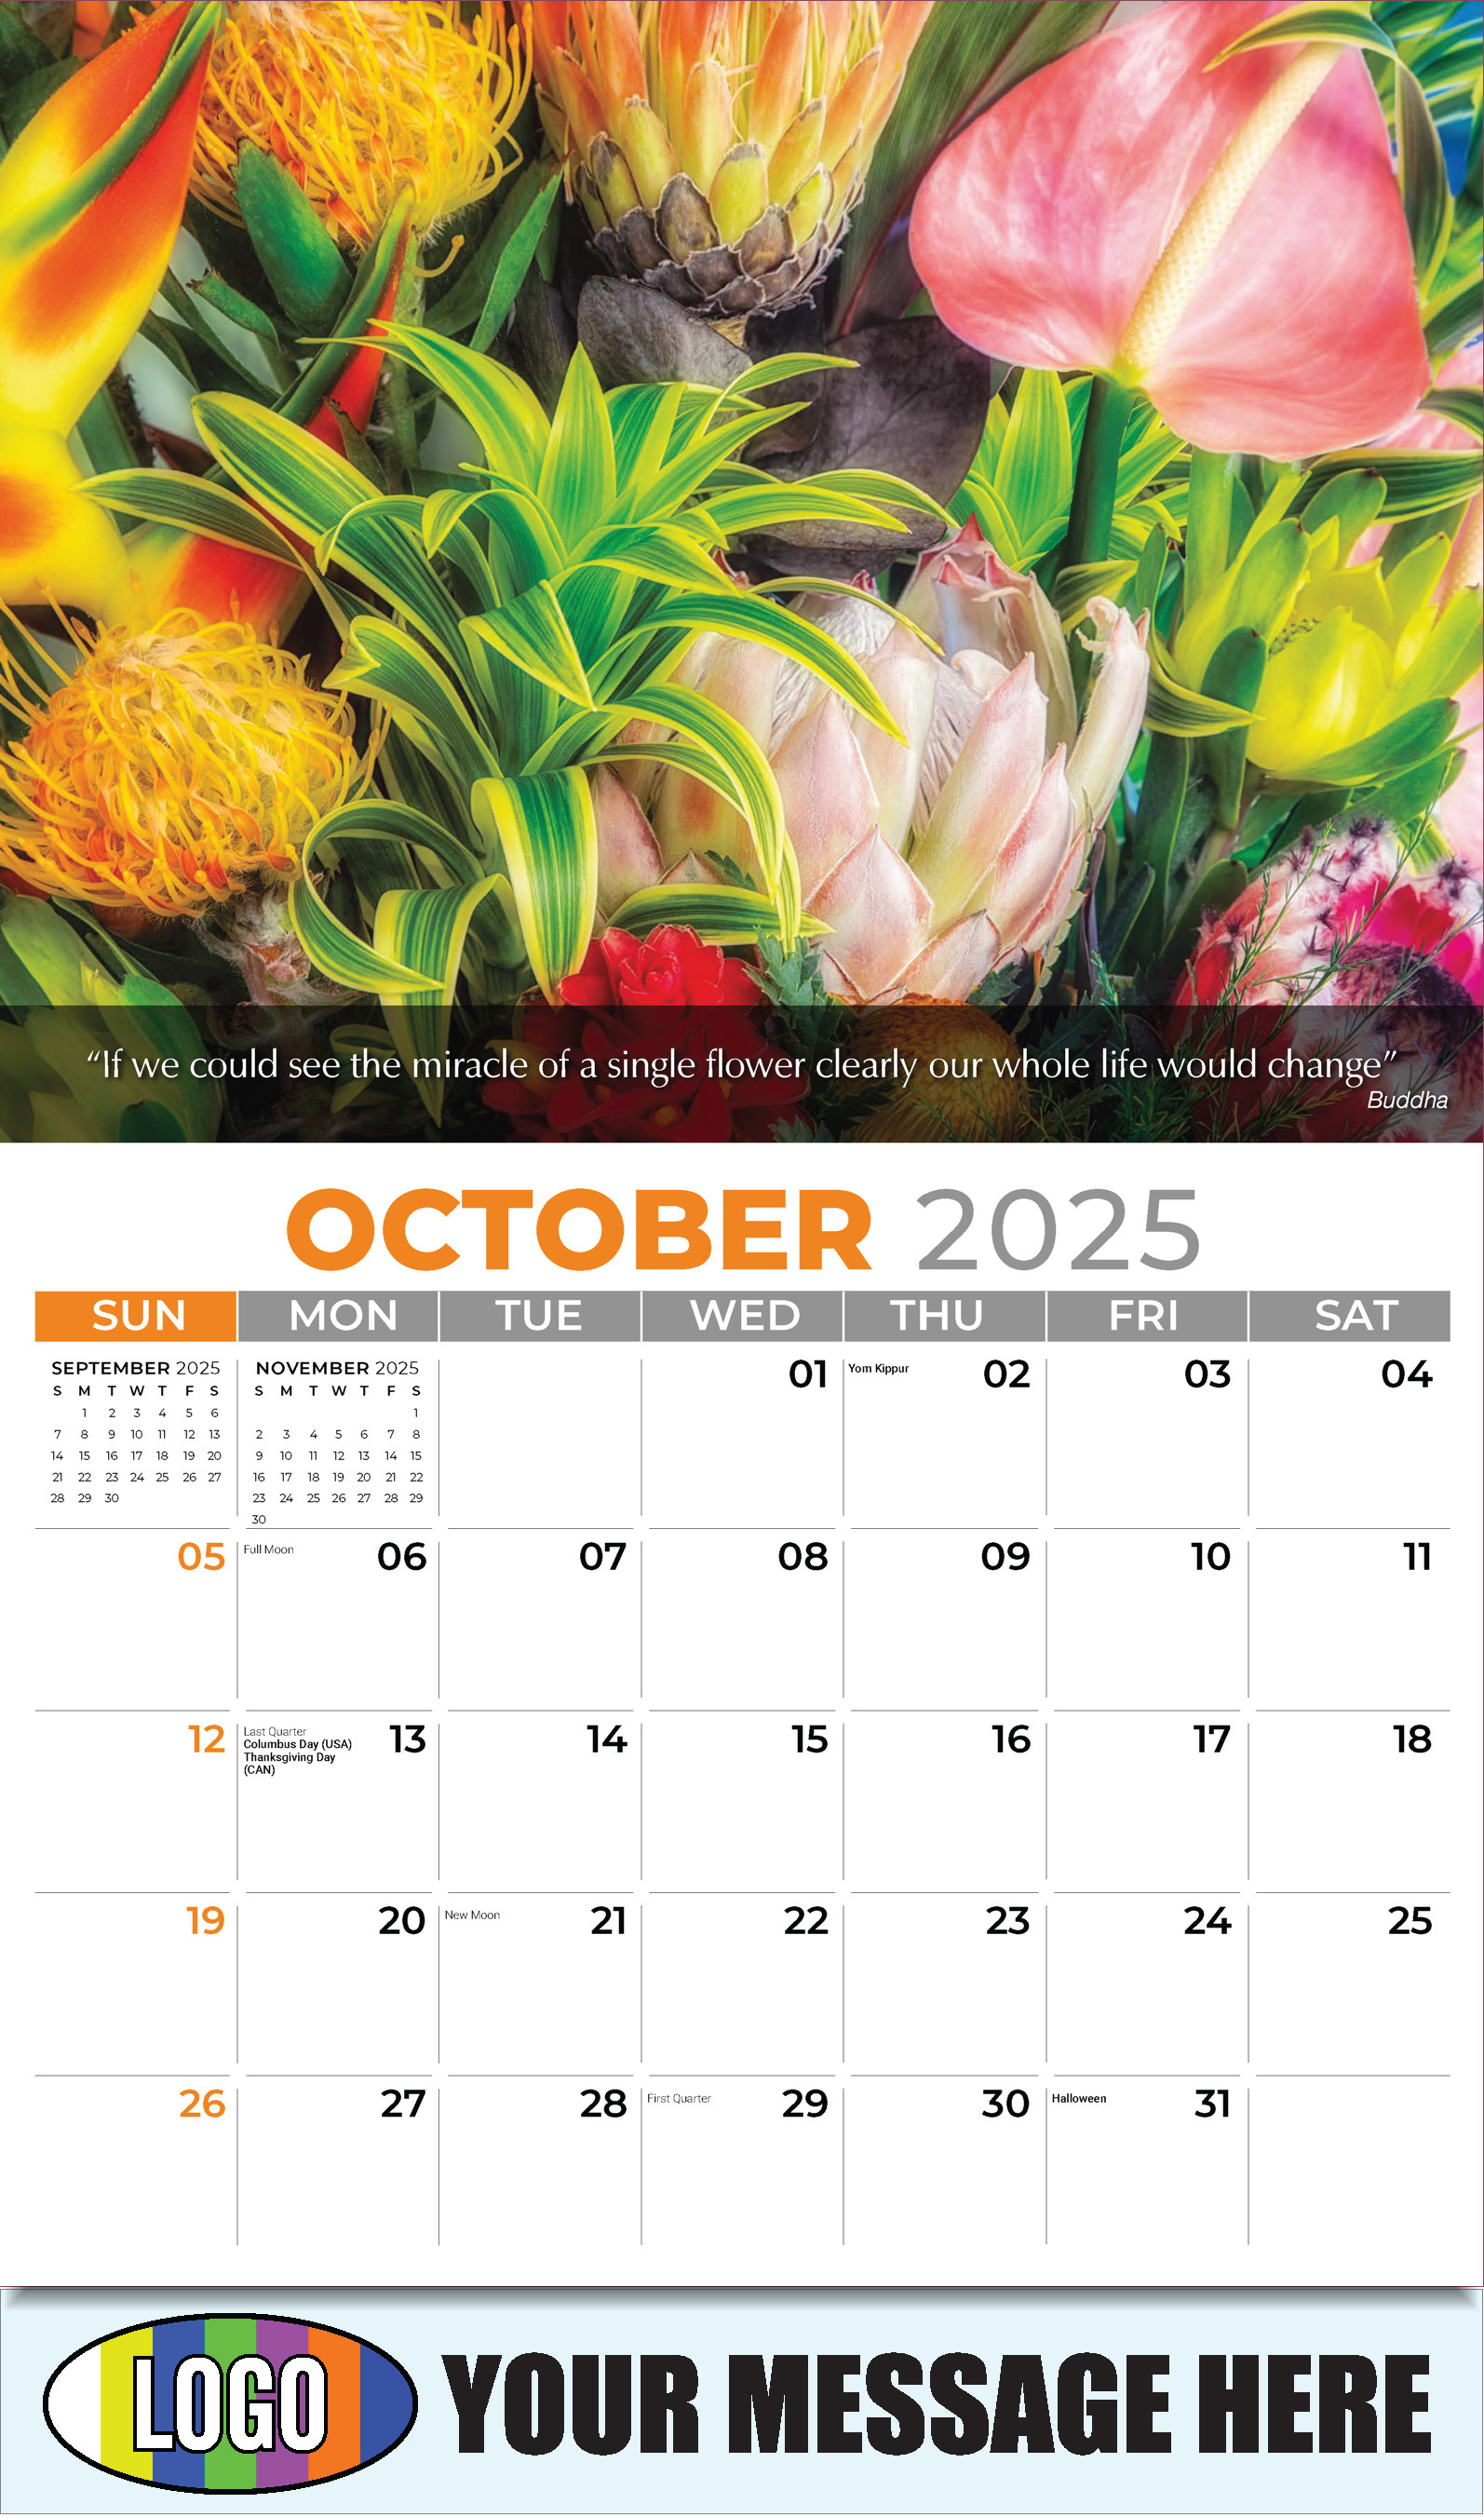 Flowers and Gardens 2025 Business Advertising Calendar - October